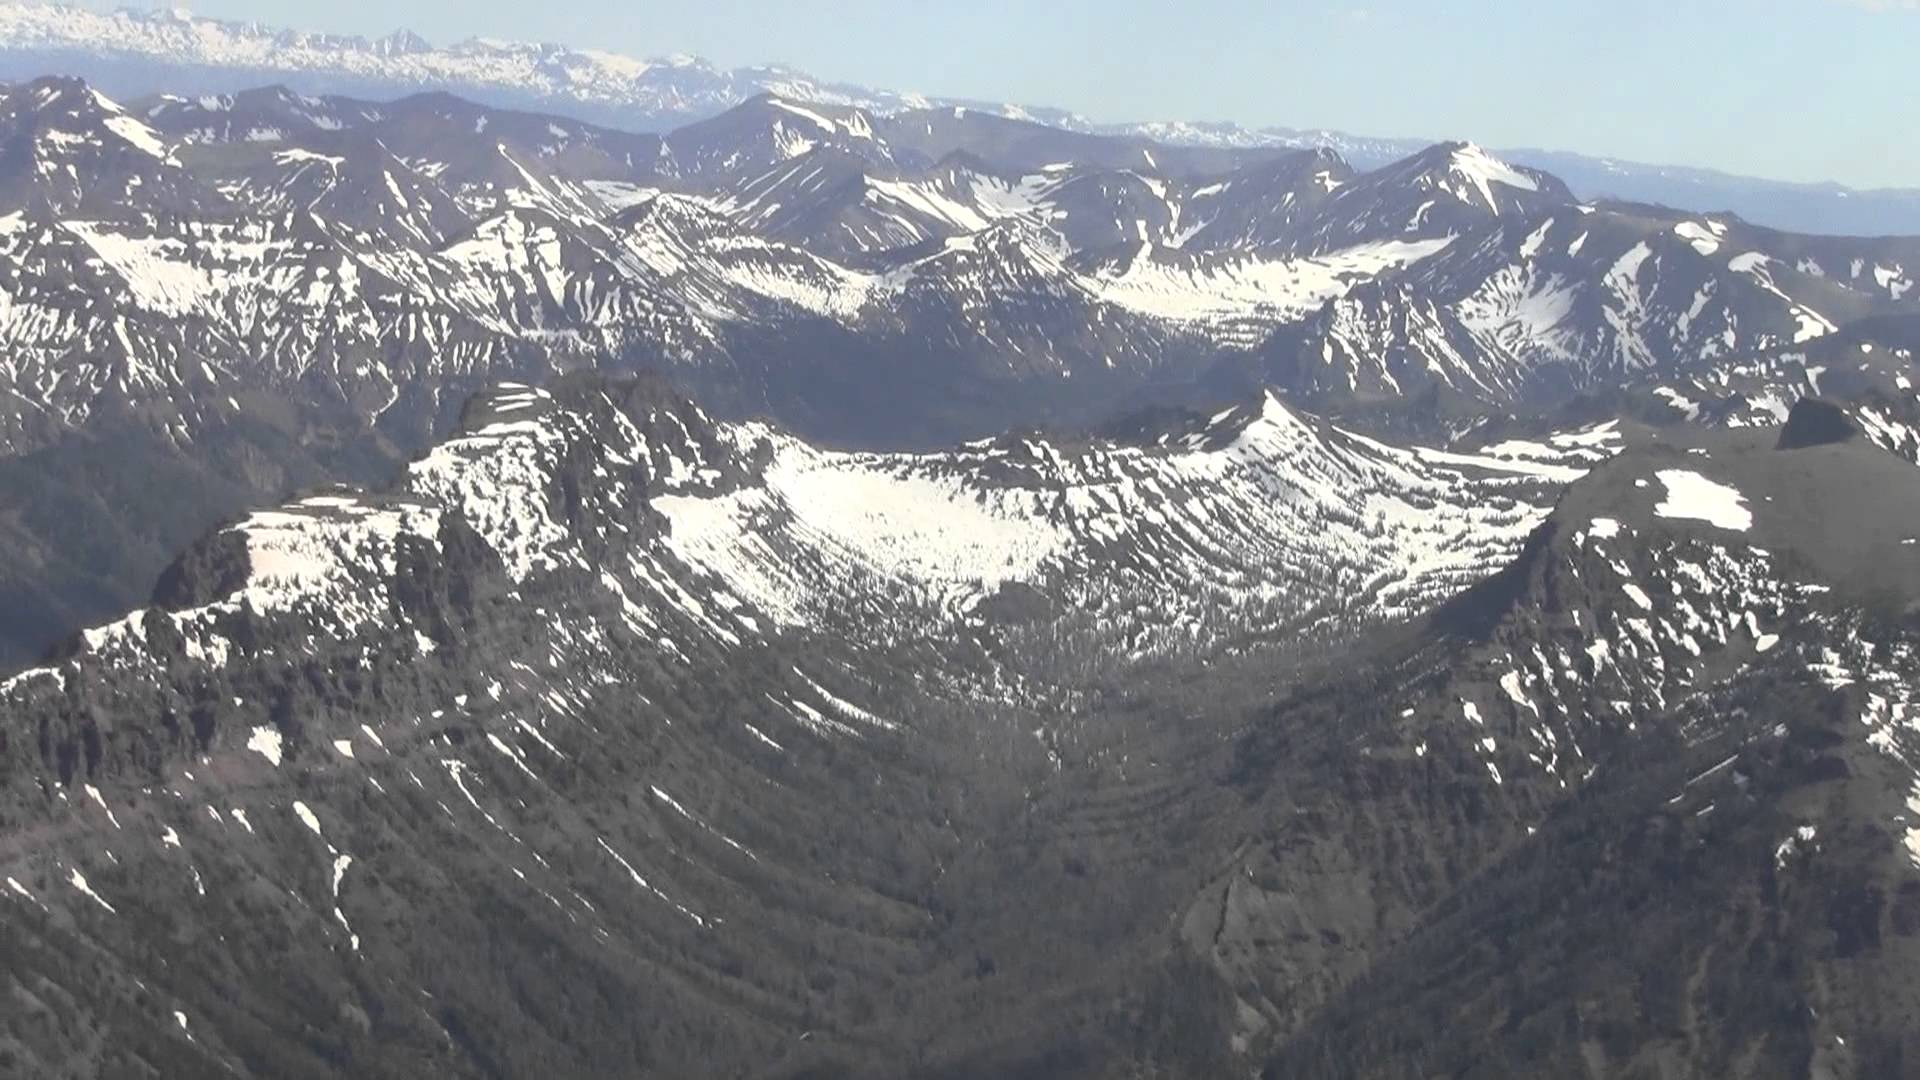 Absaroka range, Wyoming. - YouTube